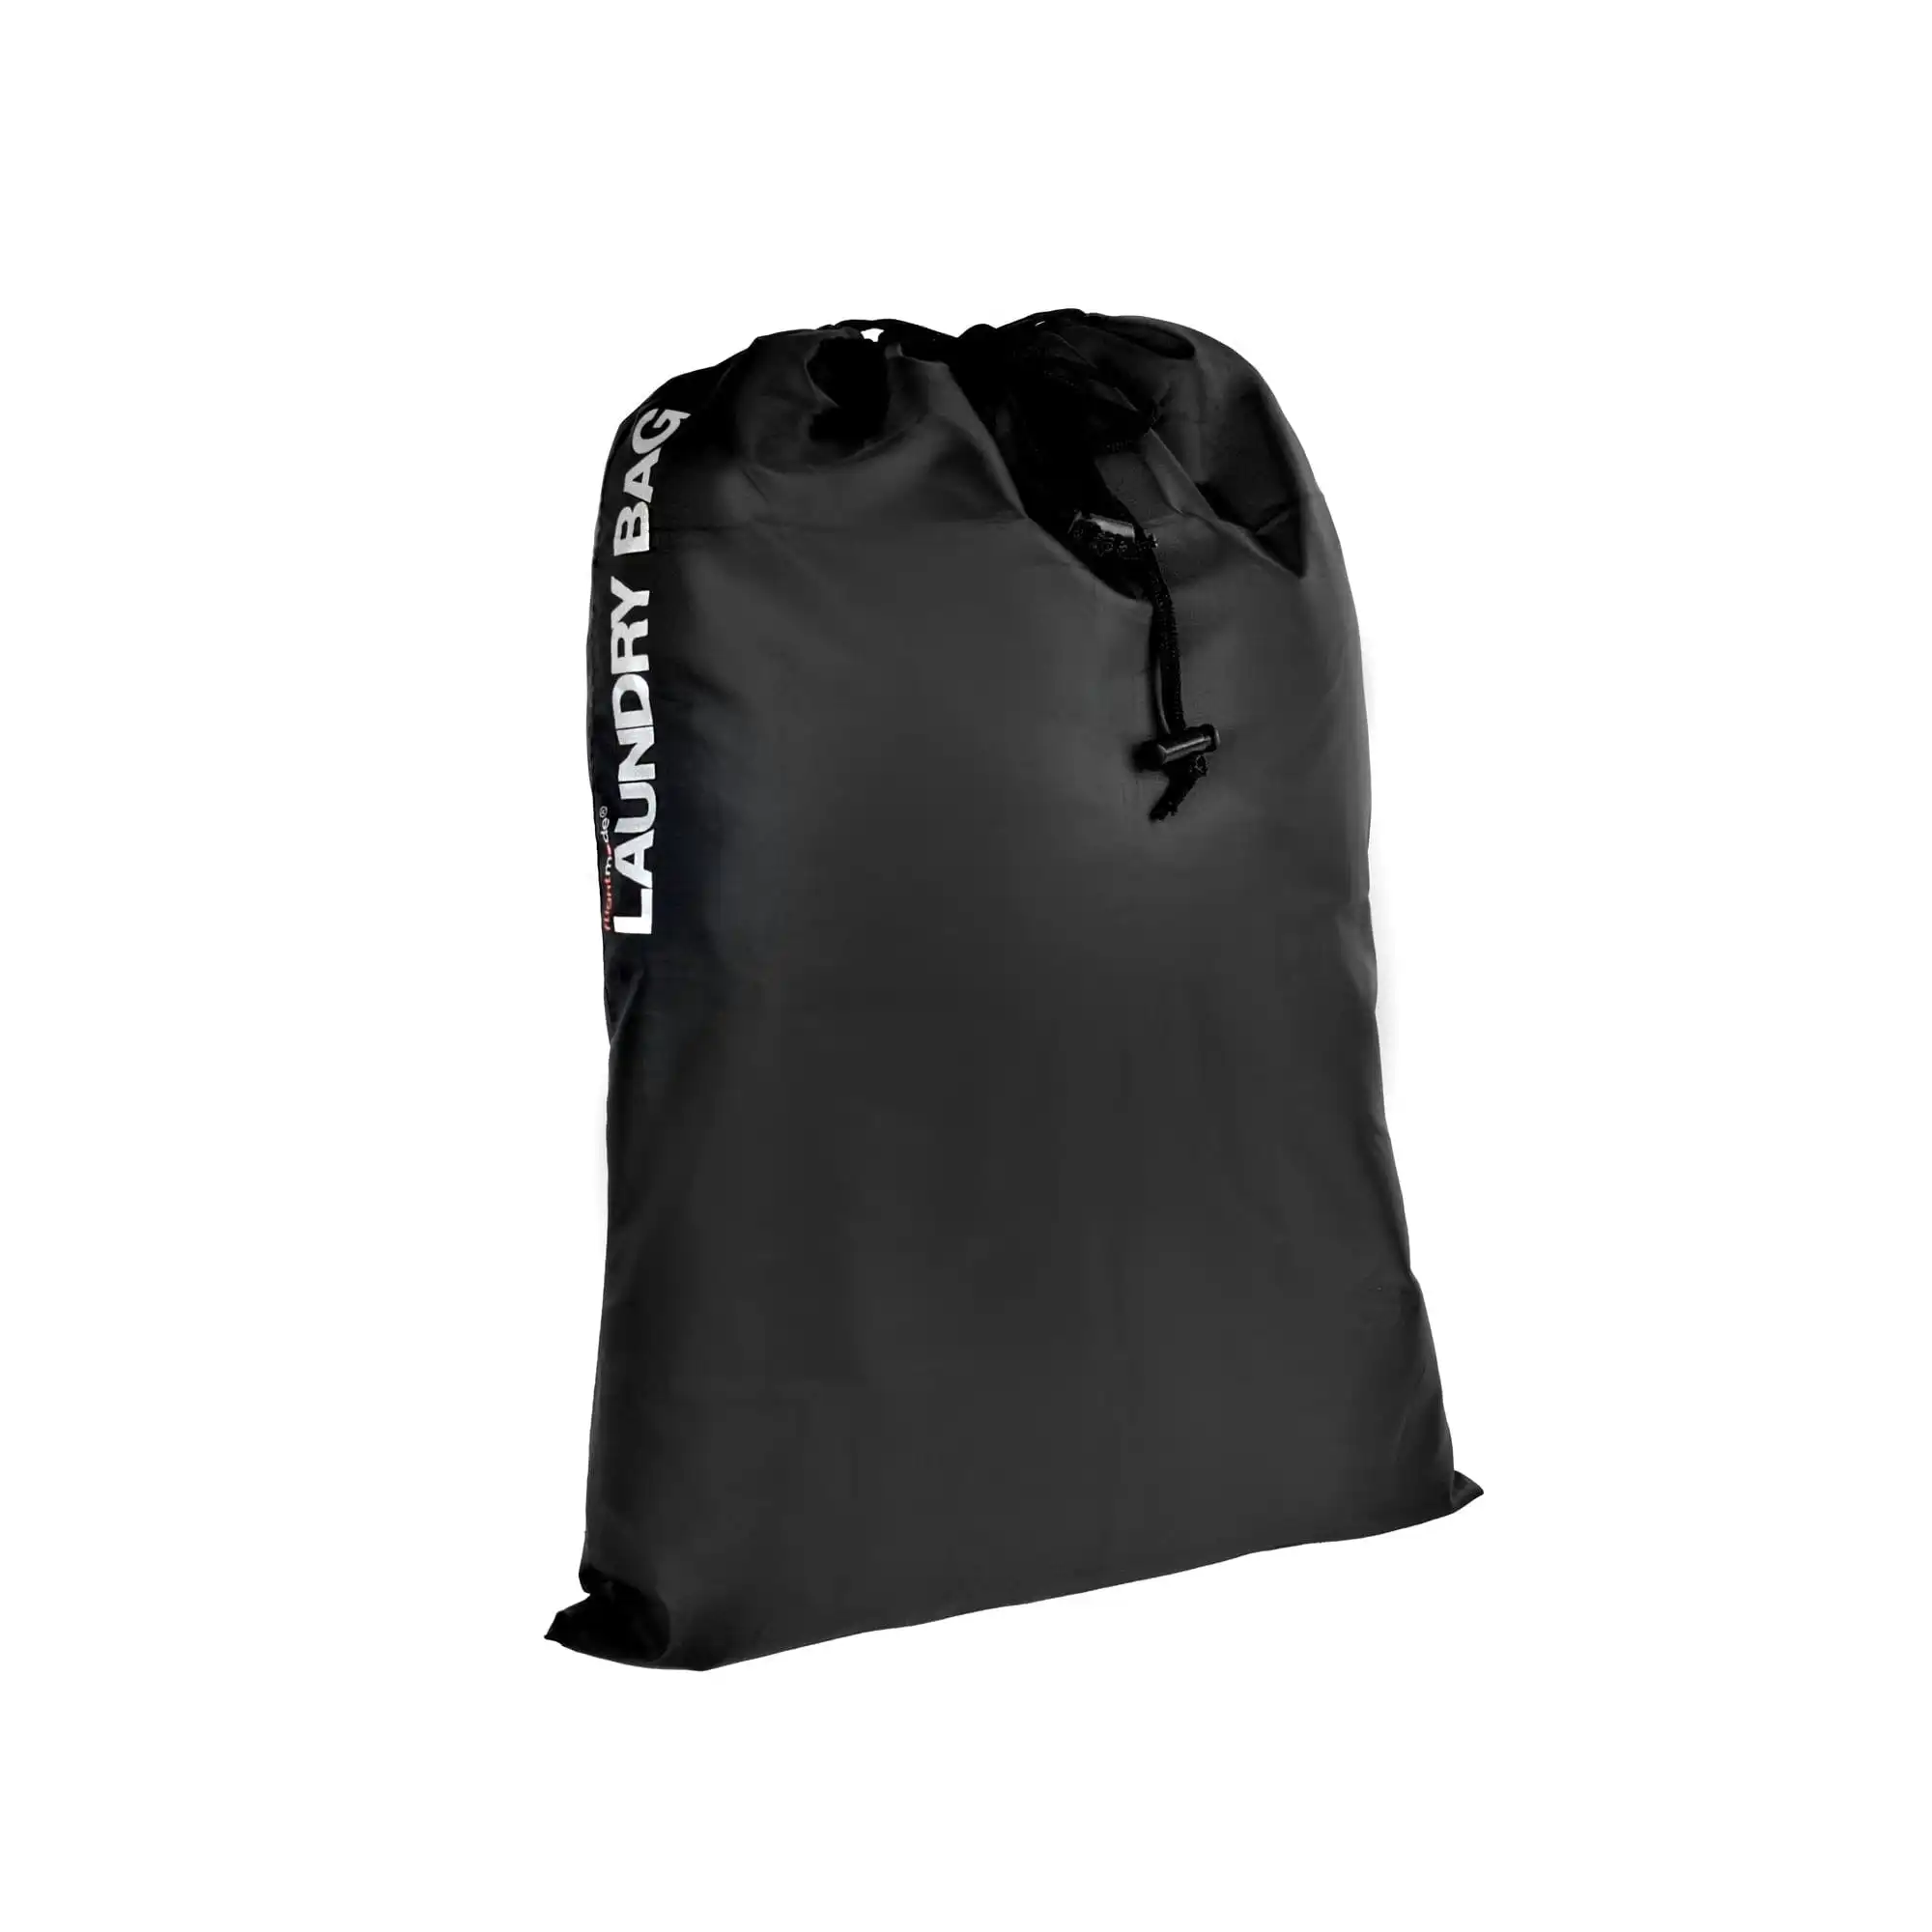 4PK Travel Laundry Bag Drawstring Water Resistant Sports Gym Clothes Organiser